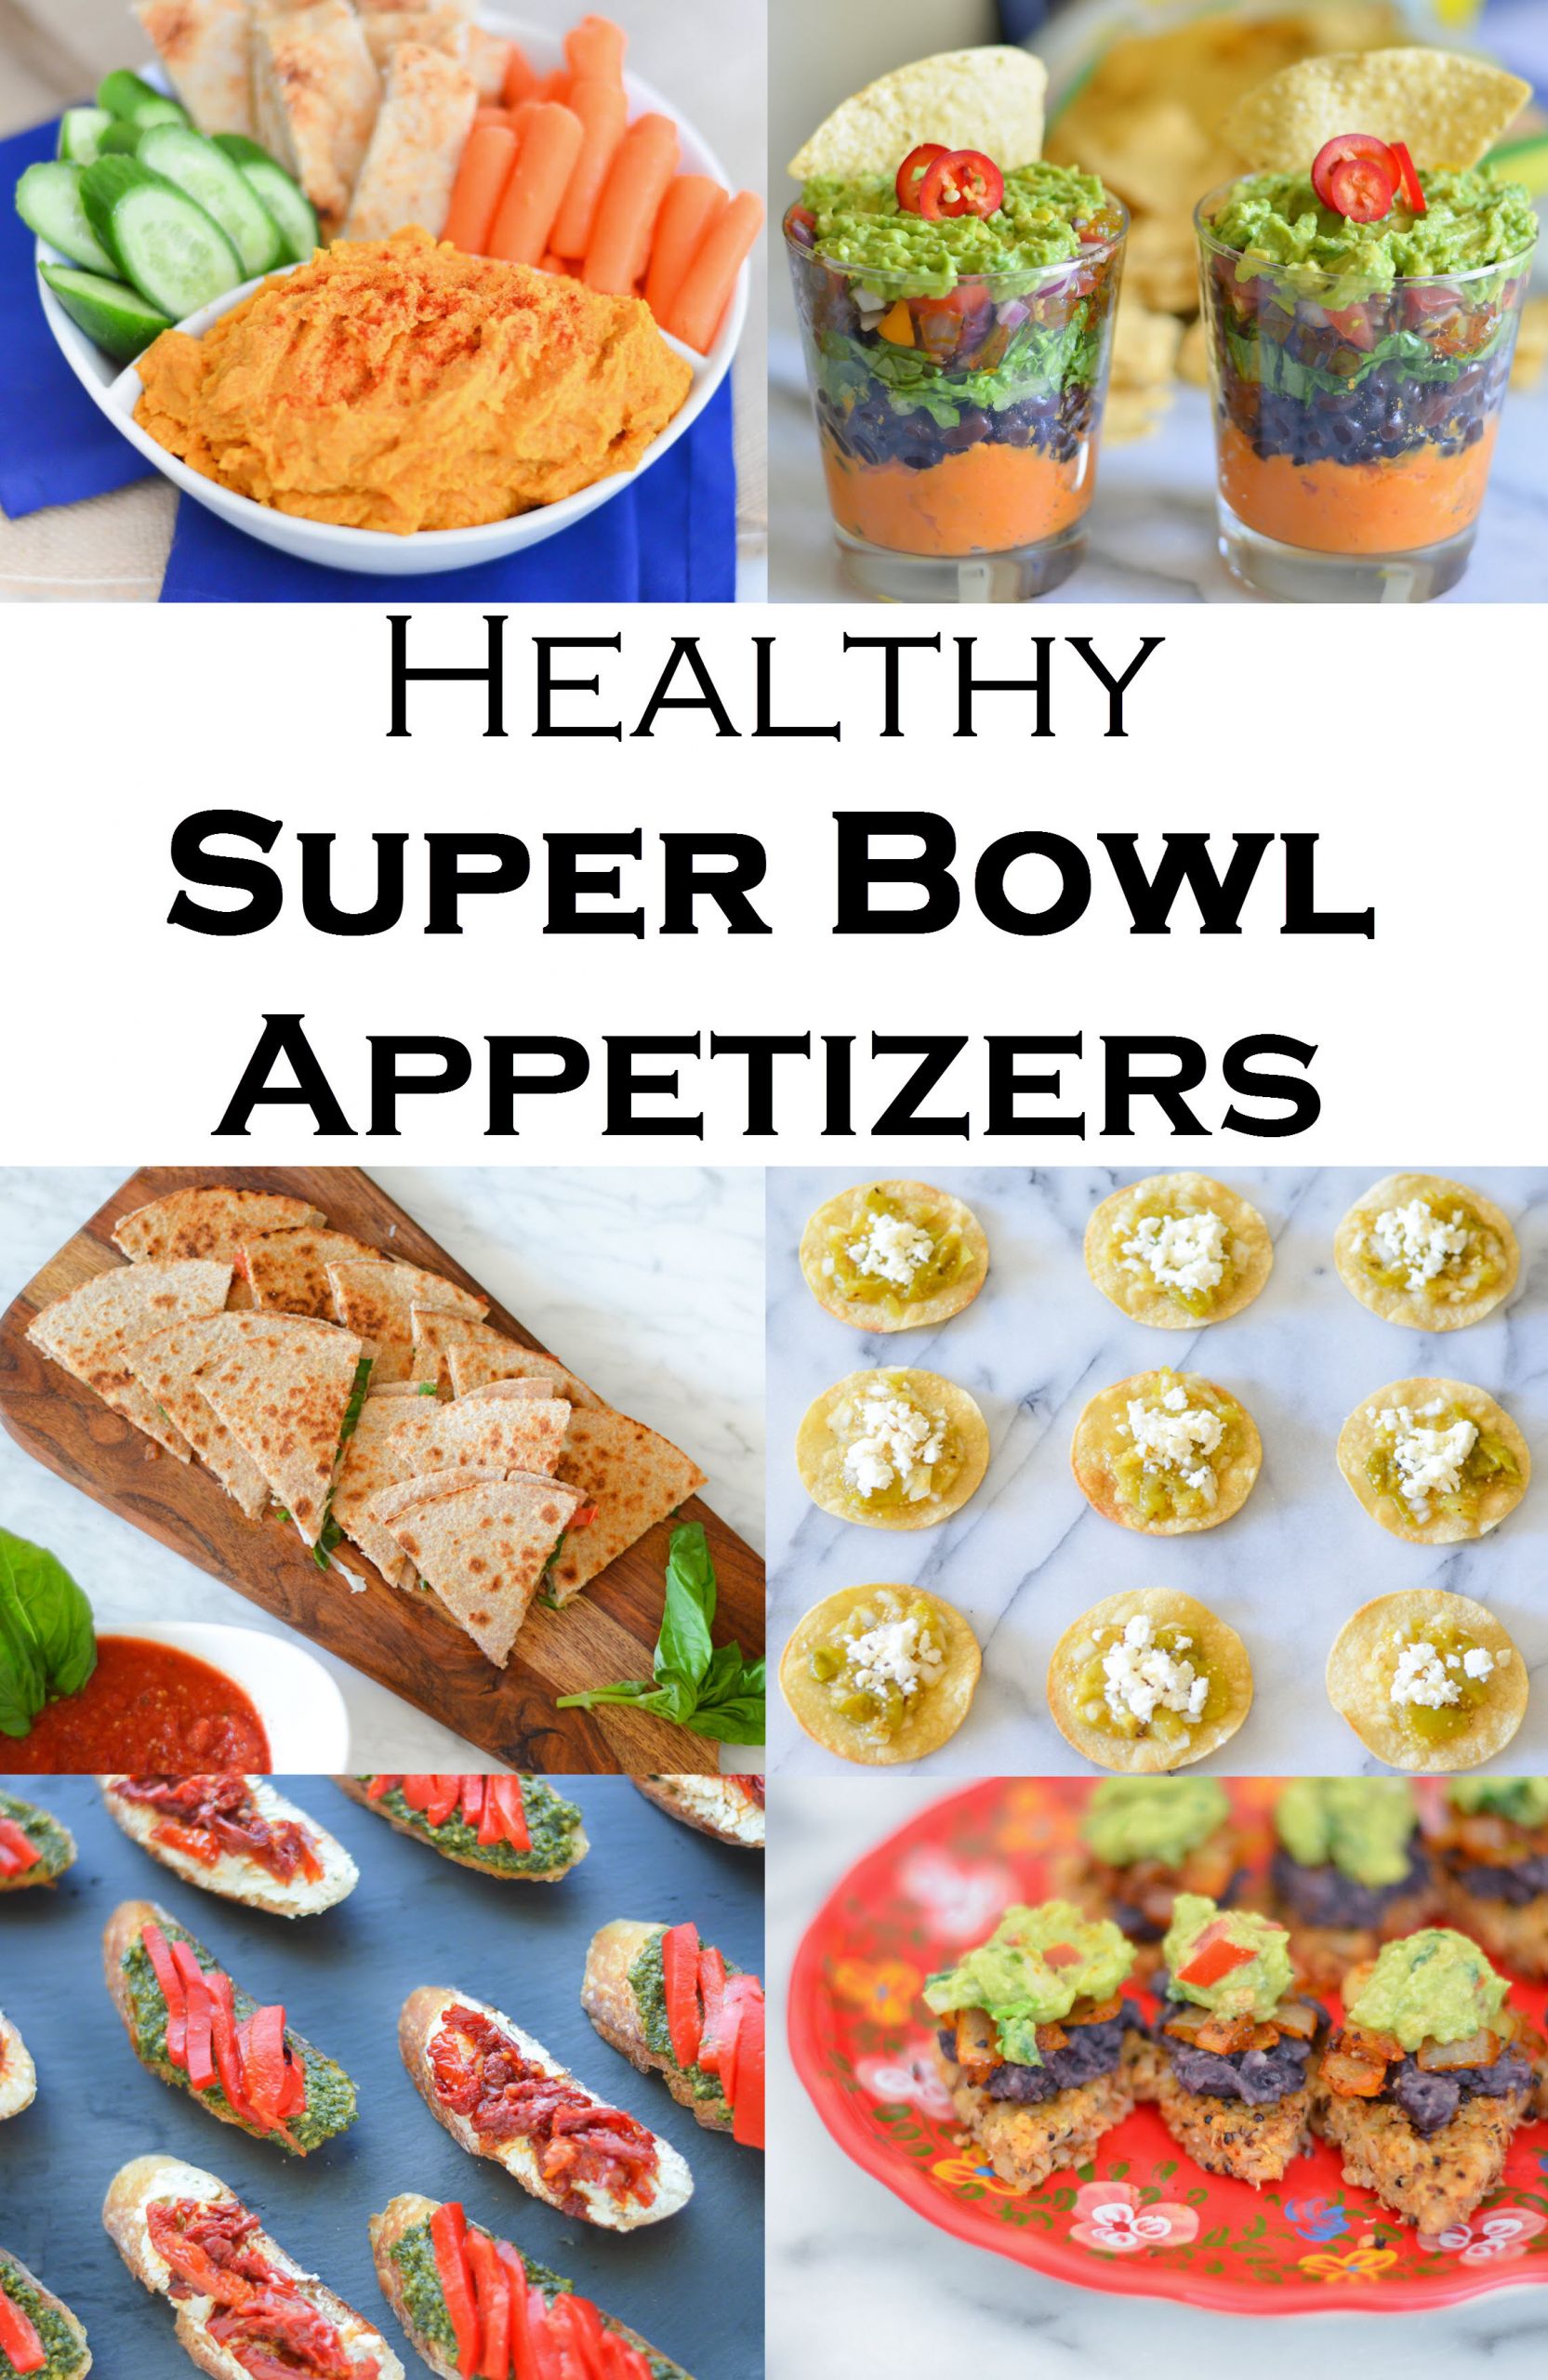 Super Bowl Appetizers Recipes
 Healthy Super Bowl Recipes For Everyone